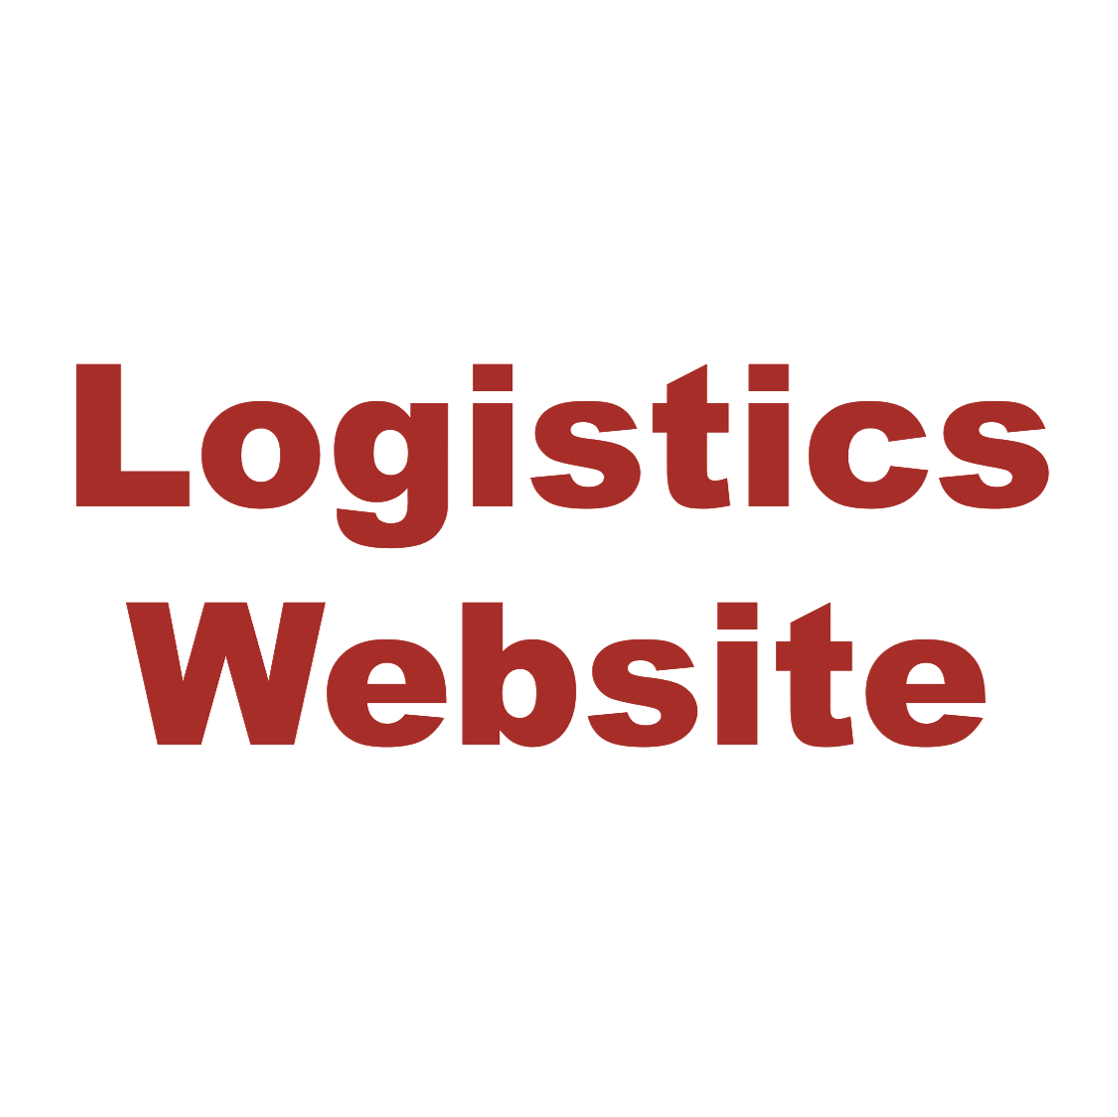 Logistics logo